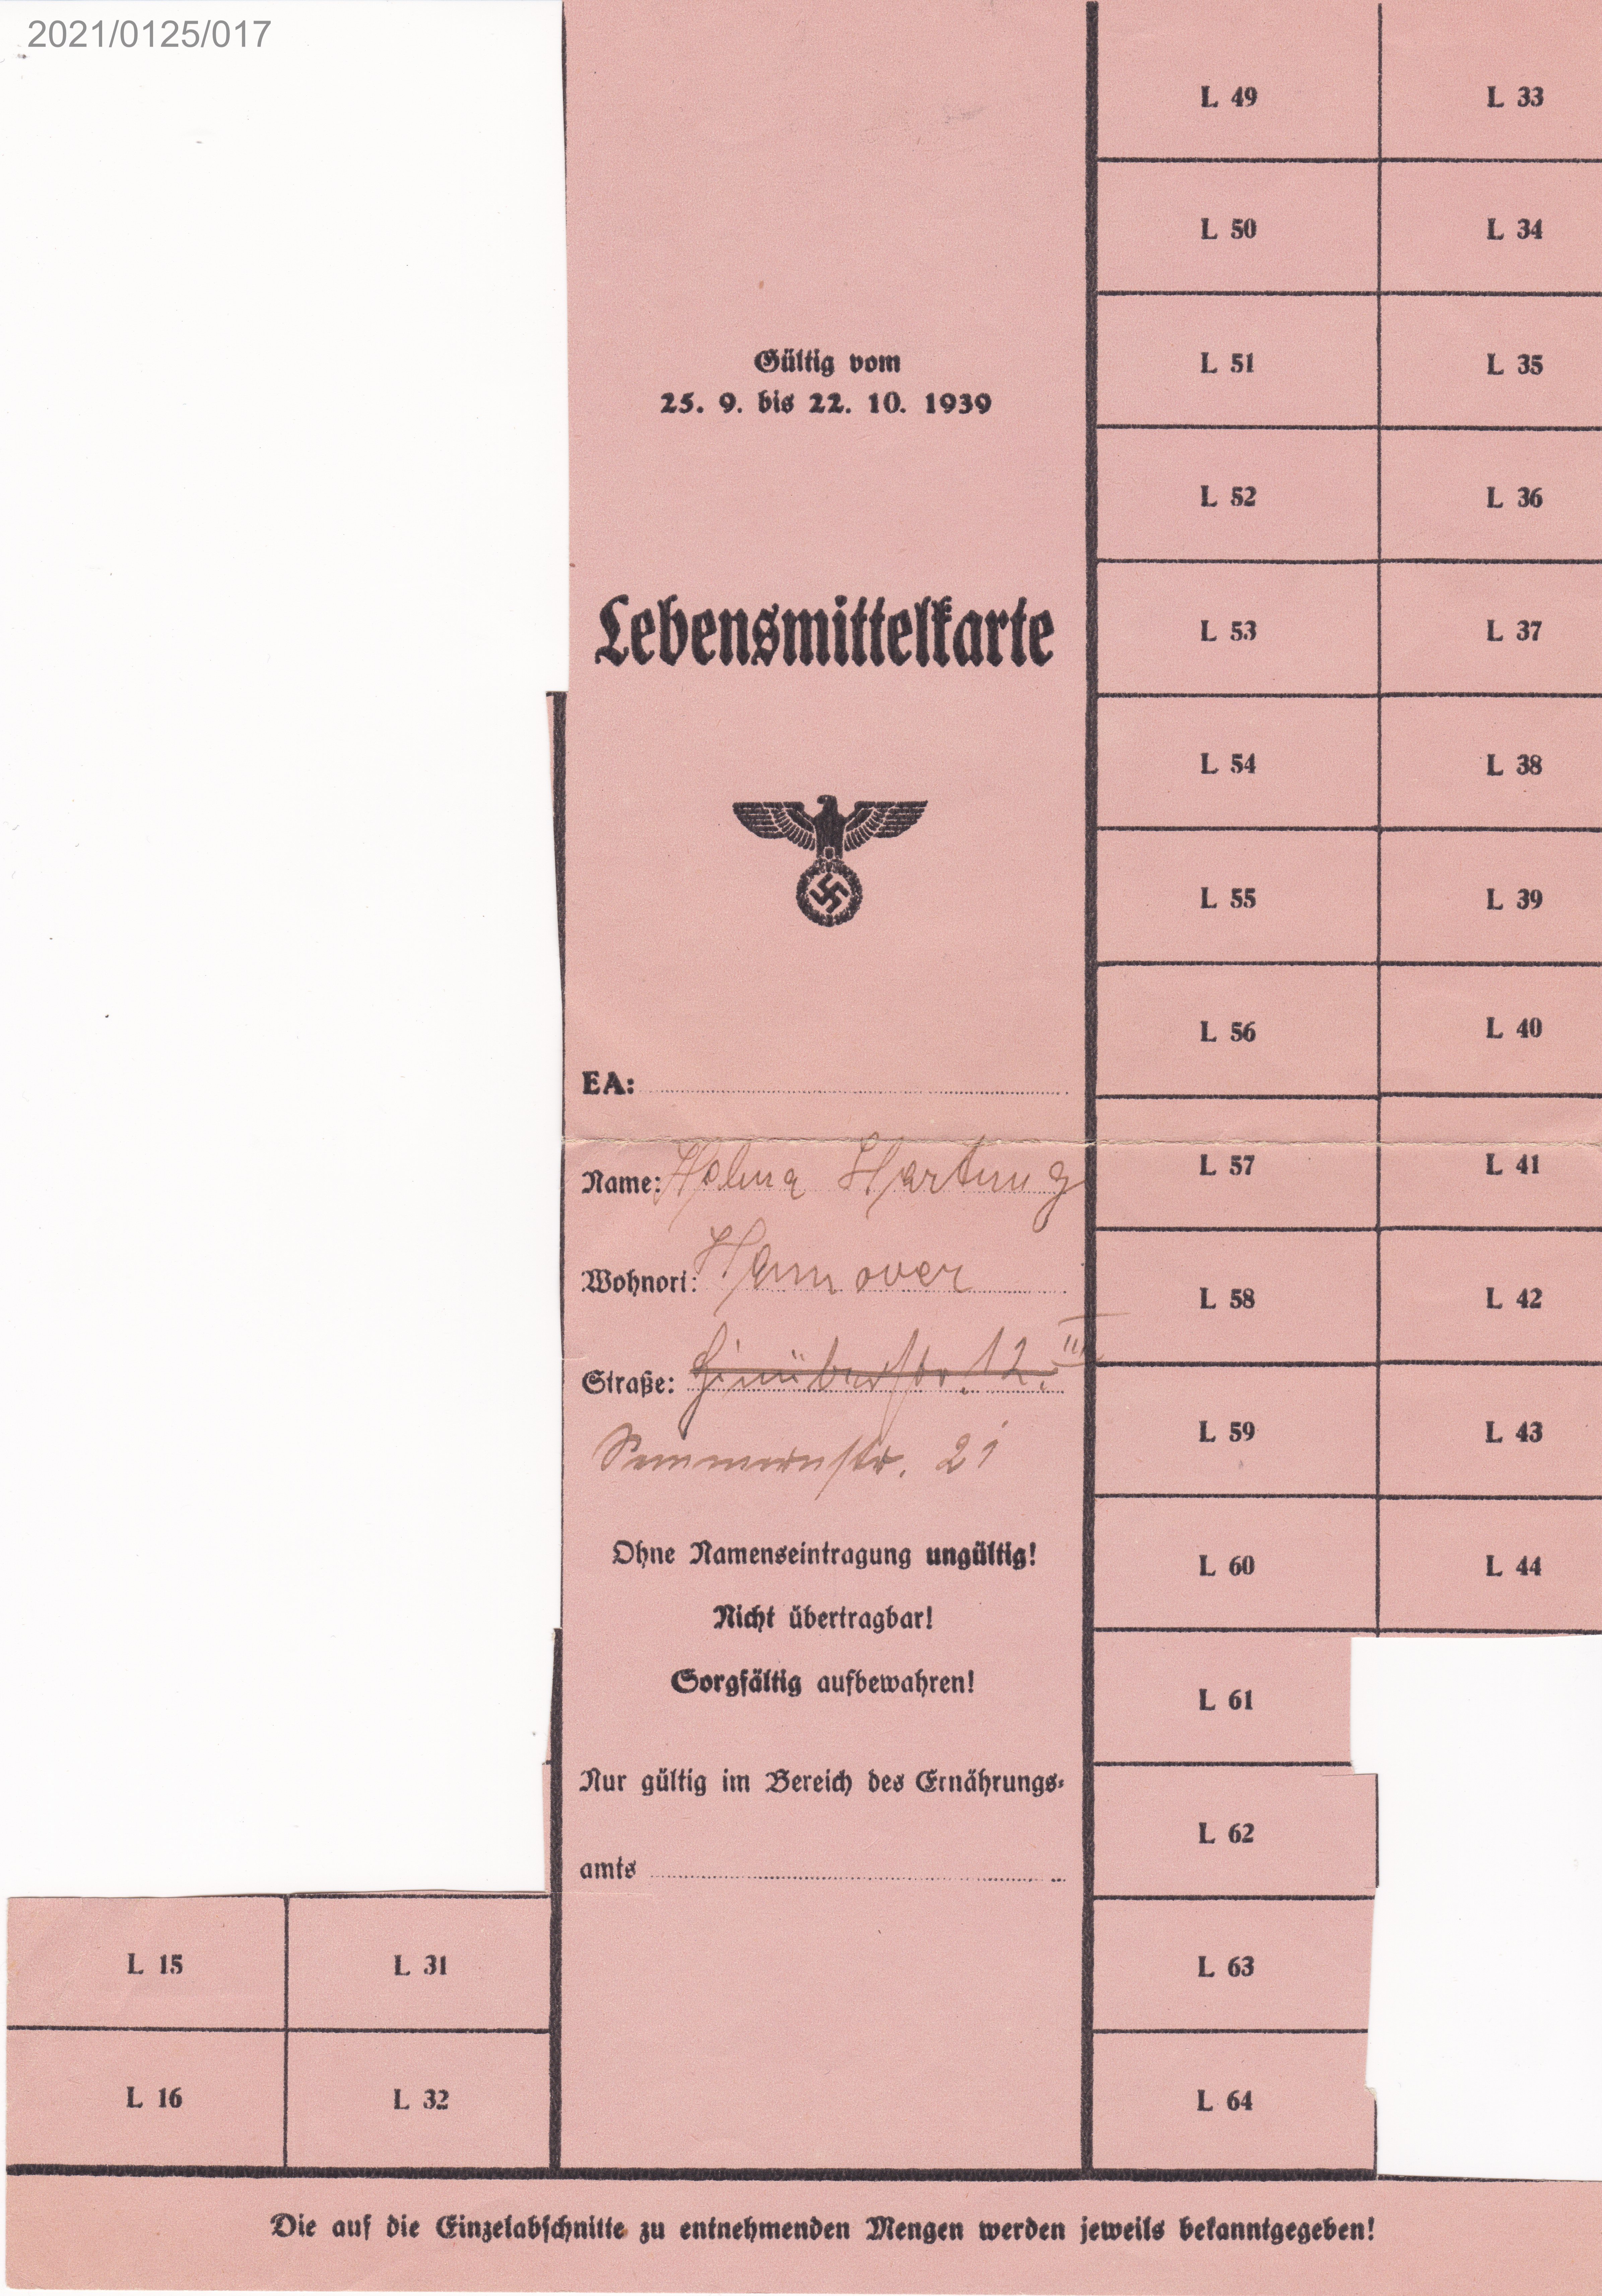 Lebensmittelkarte gültig vom 25.9. bis 22.10.1939 Helma Hartung (Museumsgesellschaft Bad Dürkheim e. V. CC BY-NC-SA)